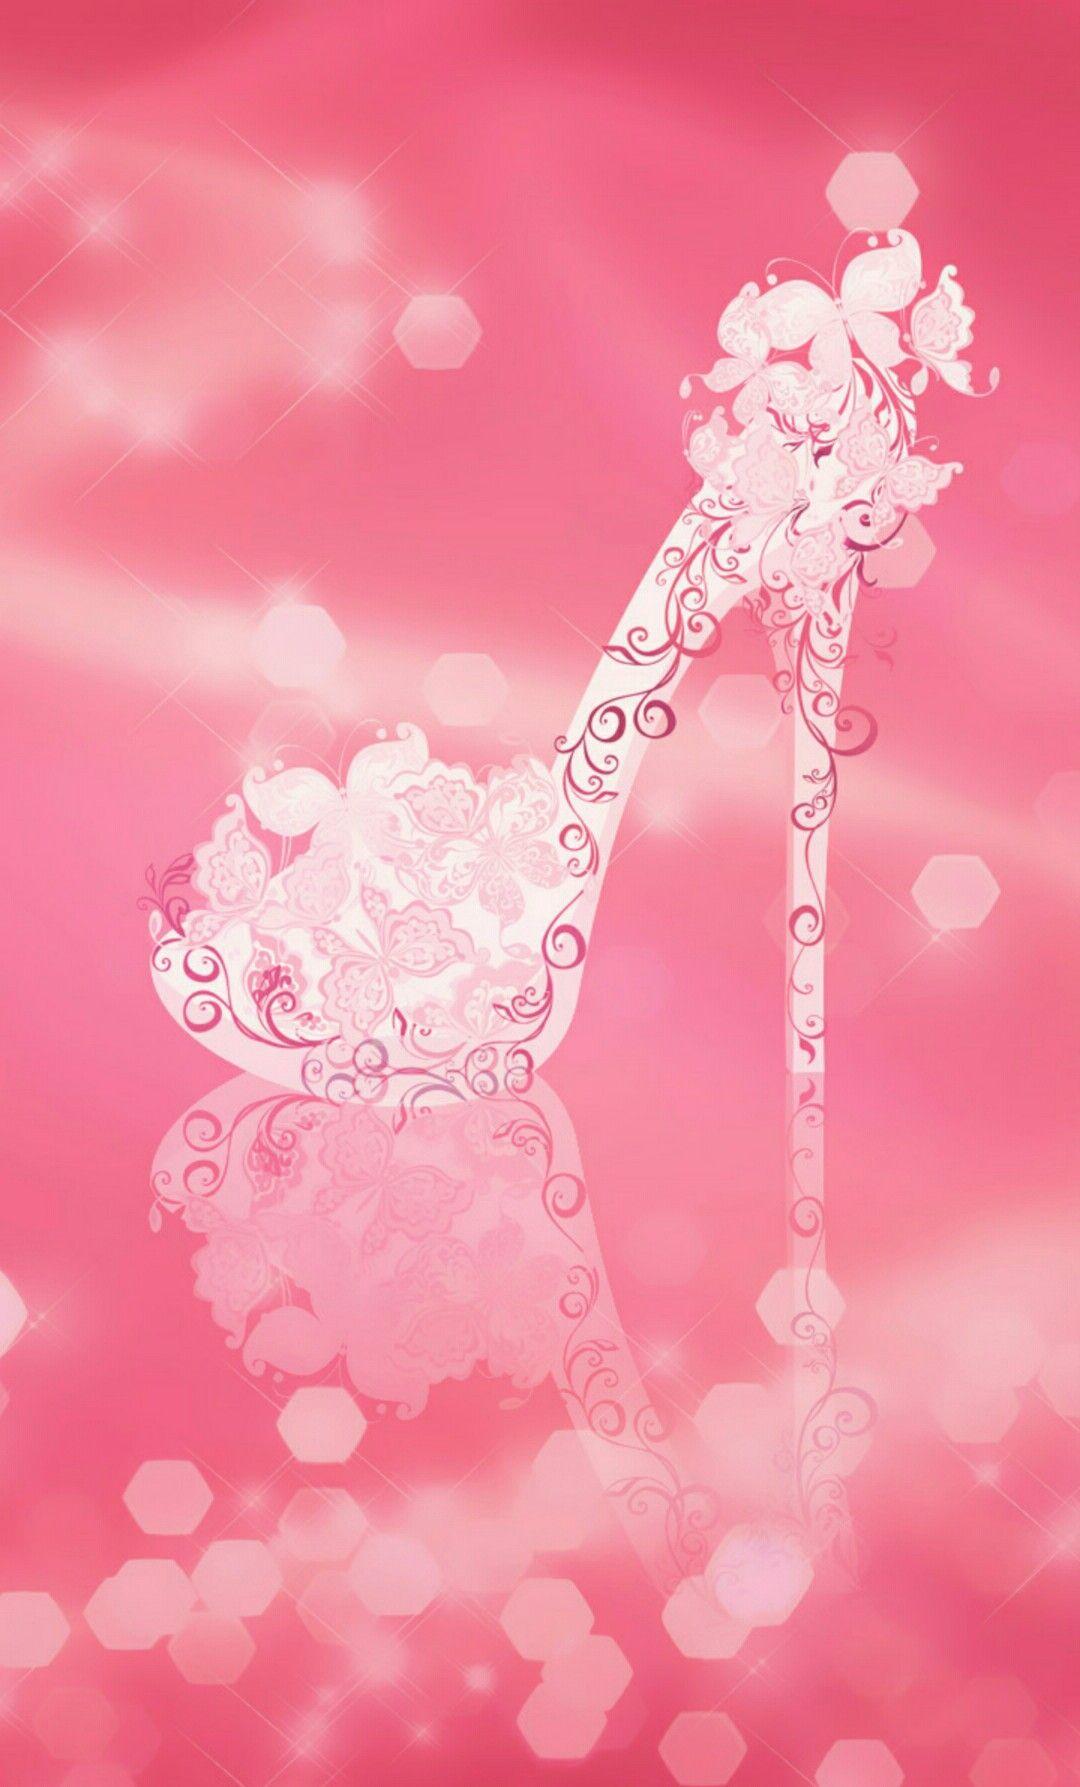 High Heel on Pink Wallpaper.By Artist Unknown. Cute girl wallpaper, Phone wallpaper image, Wallpaper background